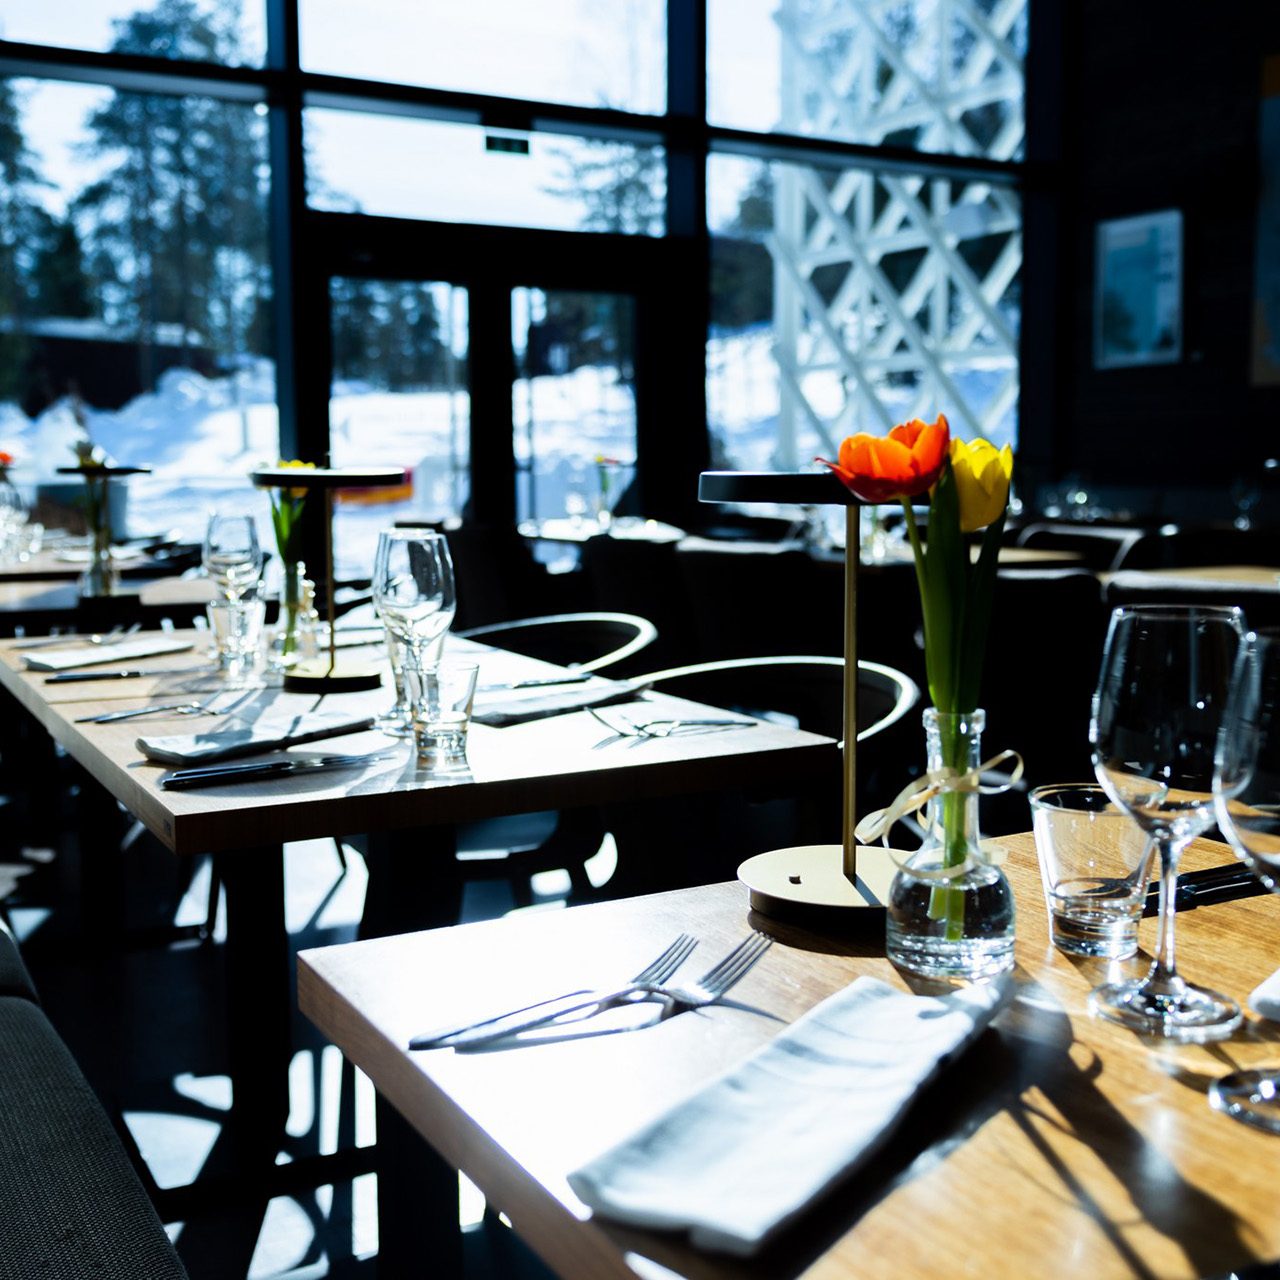 Table setting in Rakas restaurant in sunny winter day.